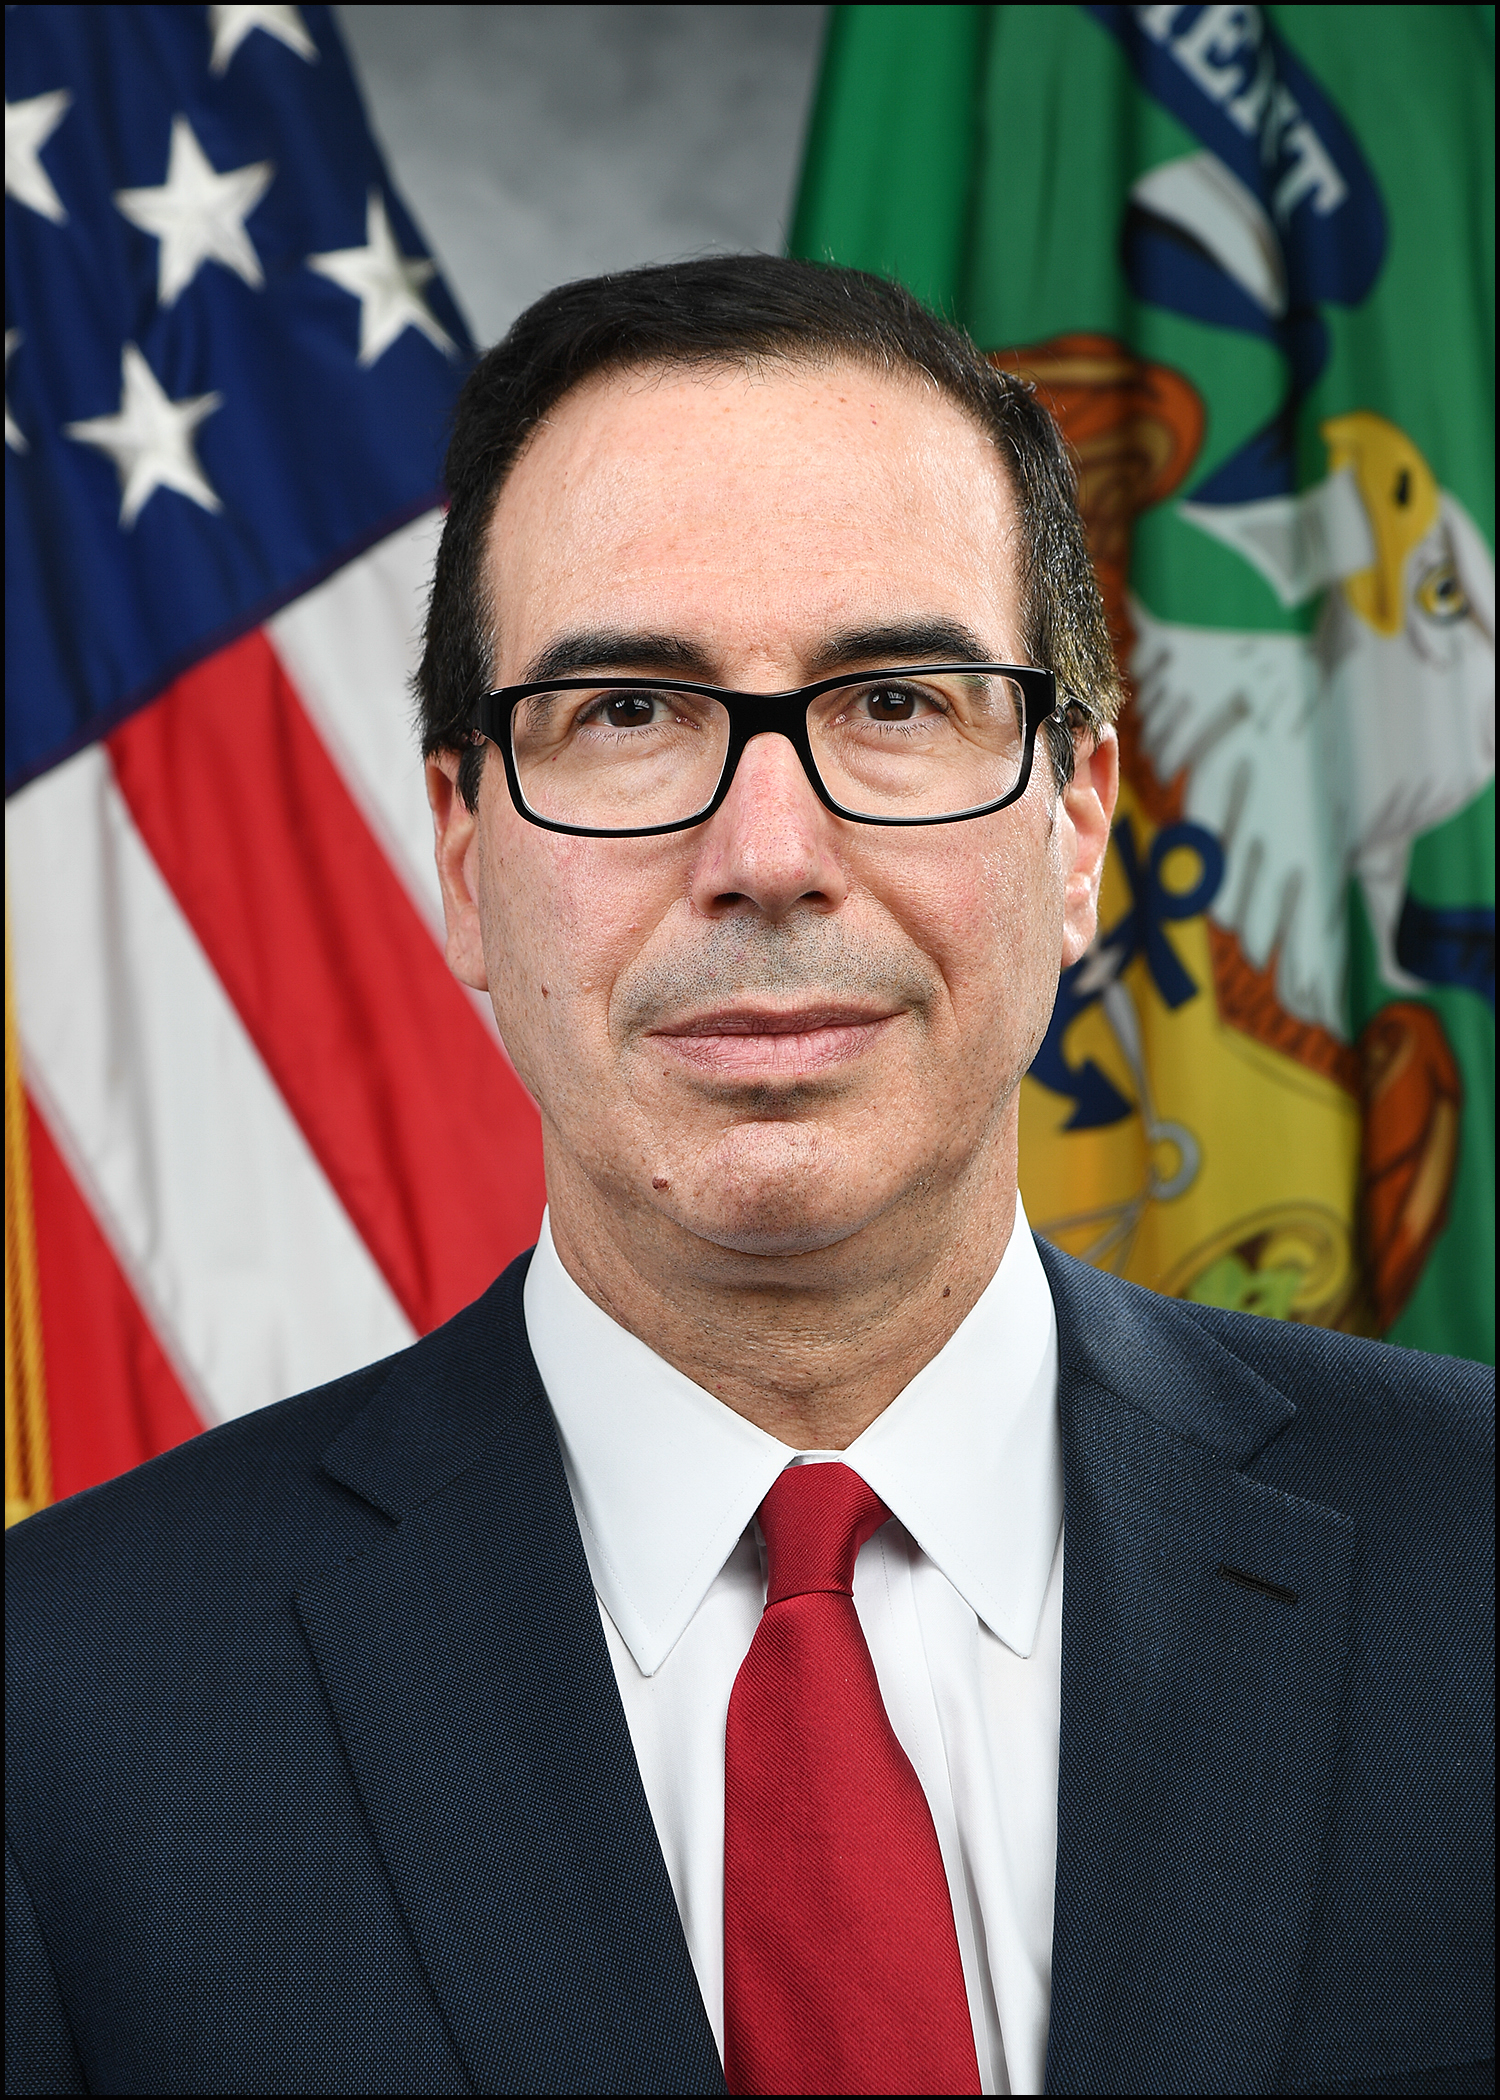 US Treasury Secretary Steven Mnuchin